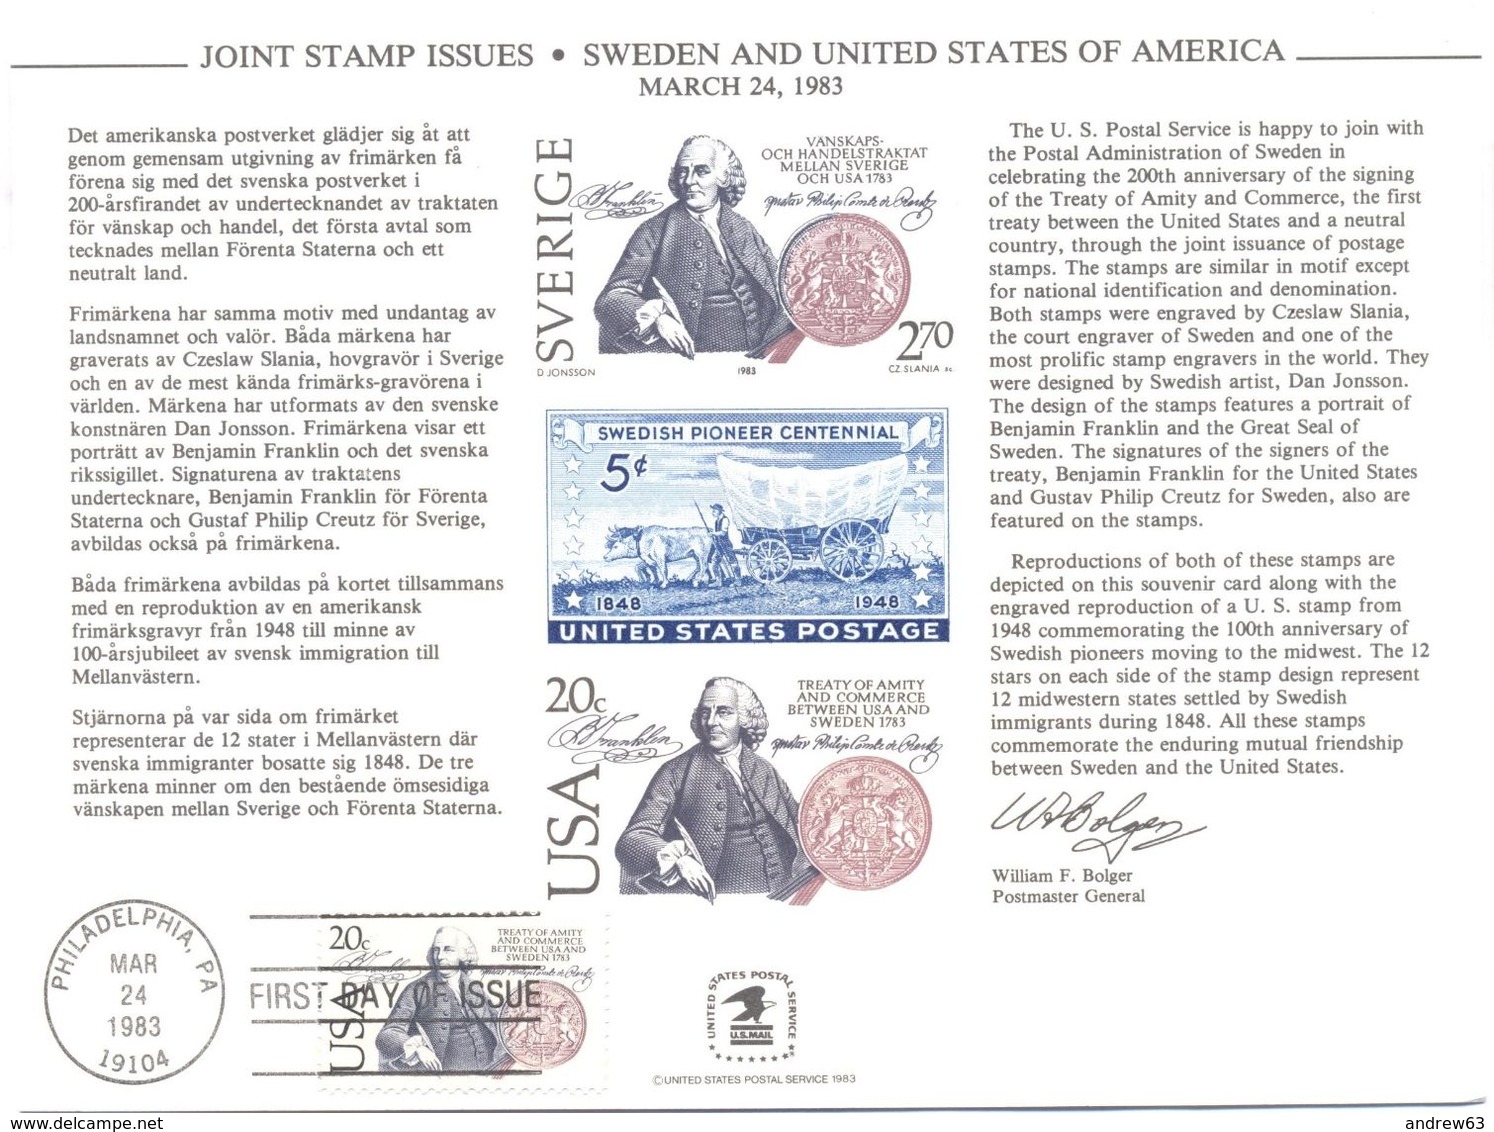 STATI UNITI - USA - 1983 - Cancelled Mint Souvenir Card - Joint Stamp Issues - USA-SWEDEN 200th Ann. Of Treaty - FDC - Cartoline Ricordo